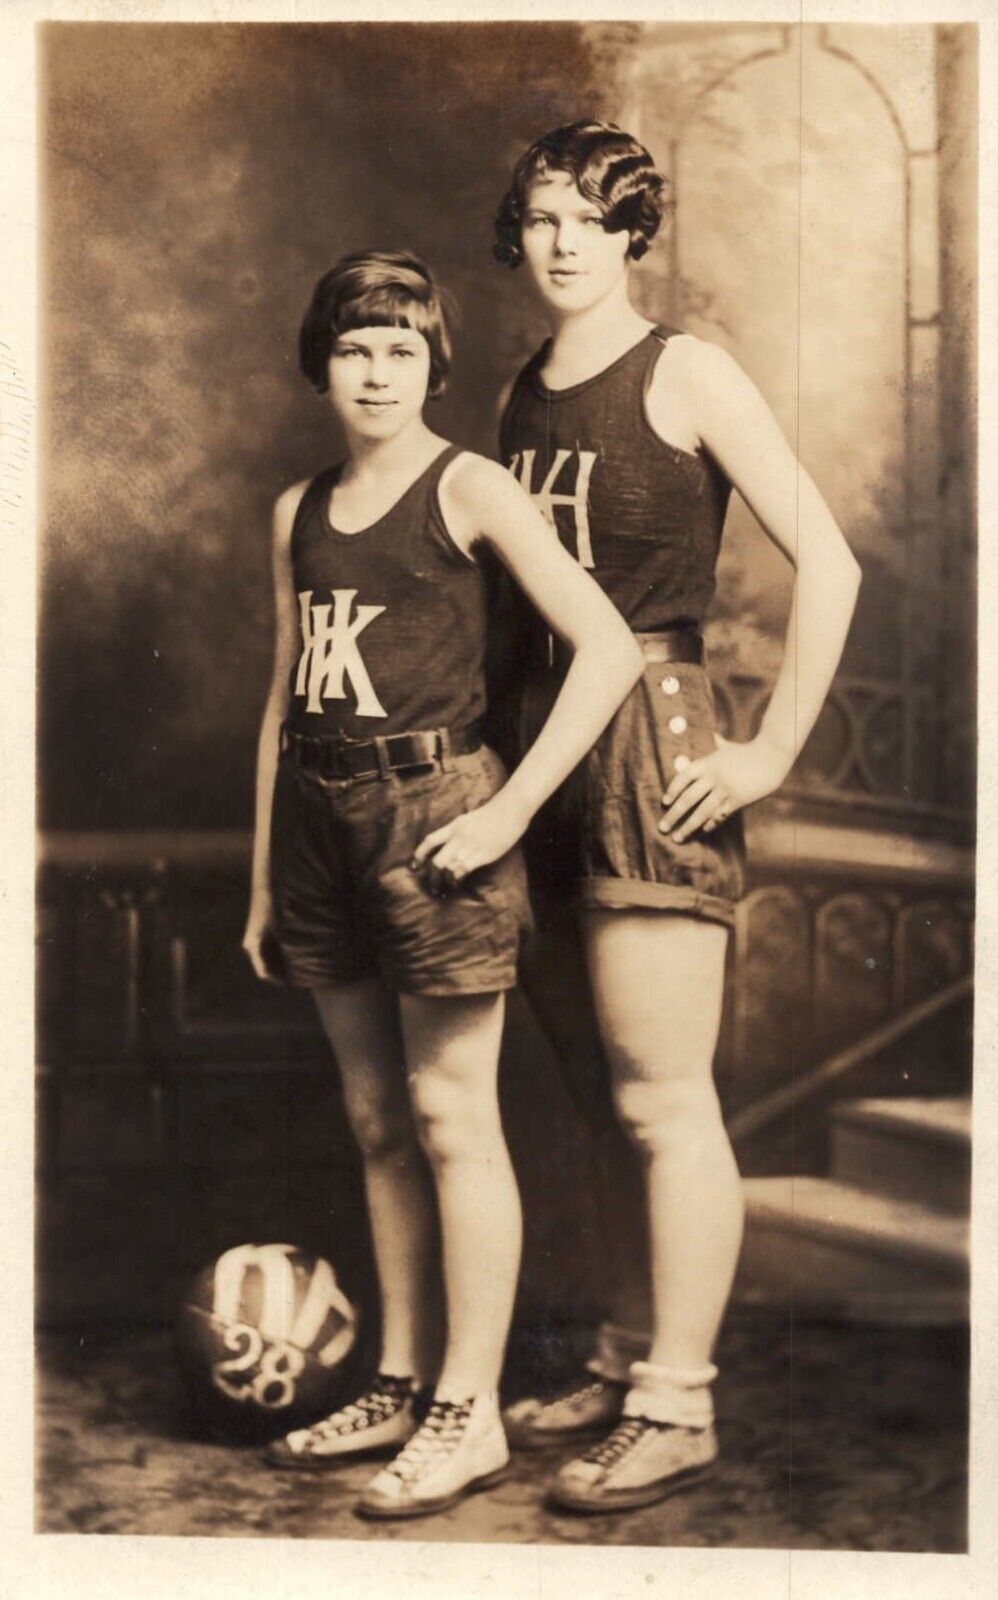 Two Women Basketball Players Pose with Ball on Floor Vintage RPPC Postcard